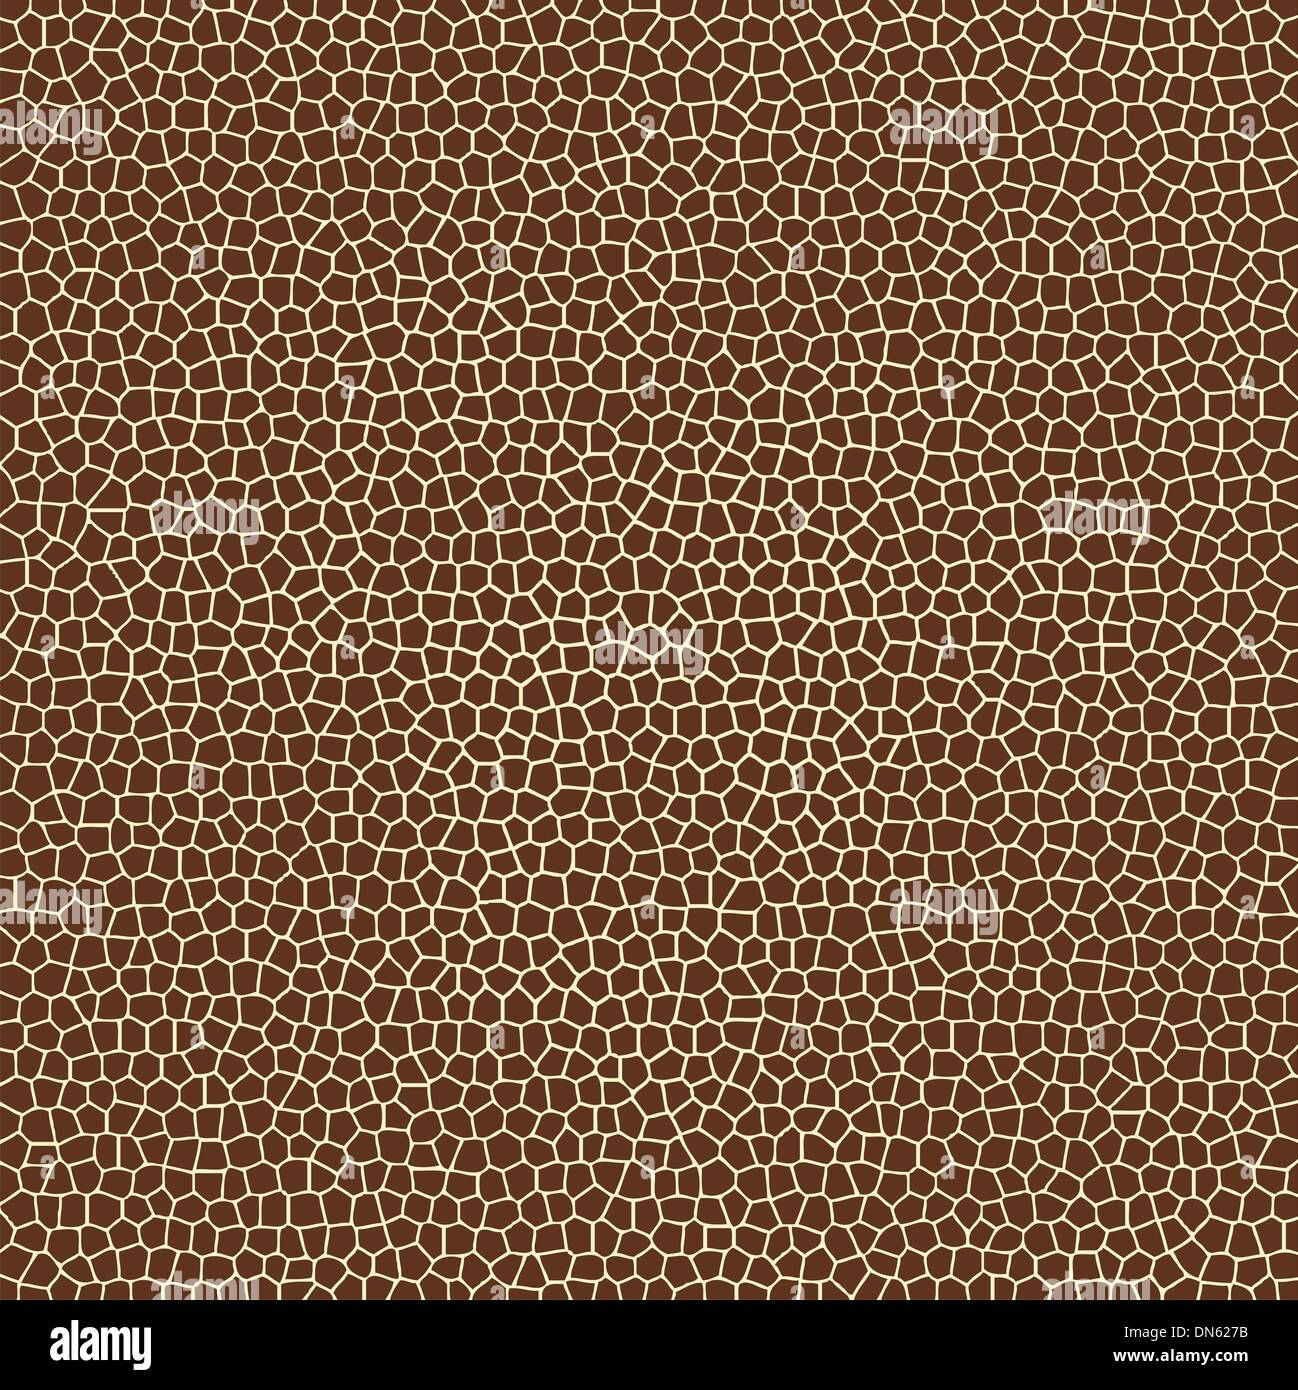 vector animal skin textures of giraffe Stock Vector